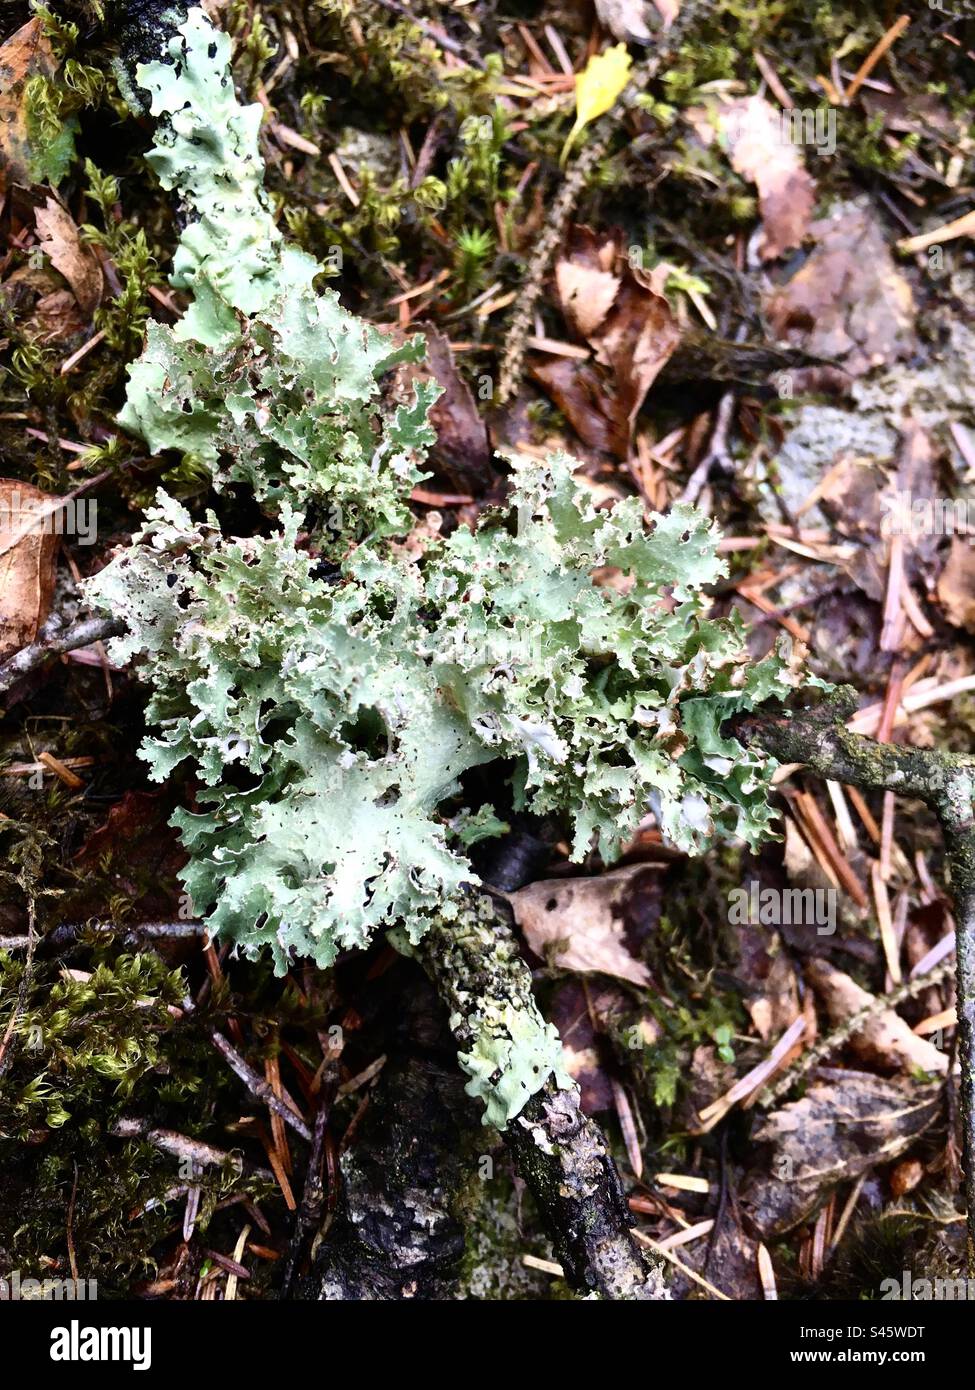 Lichen Amongst Woodland Leaf Litter Stock Photo